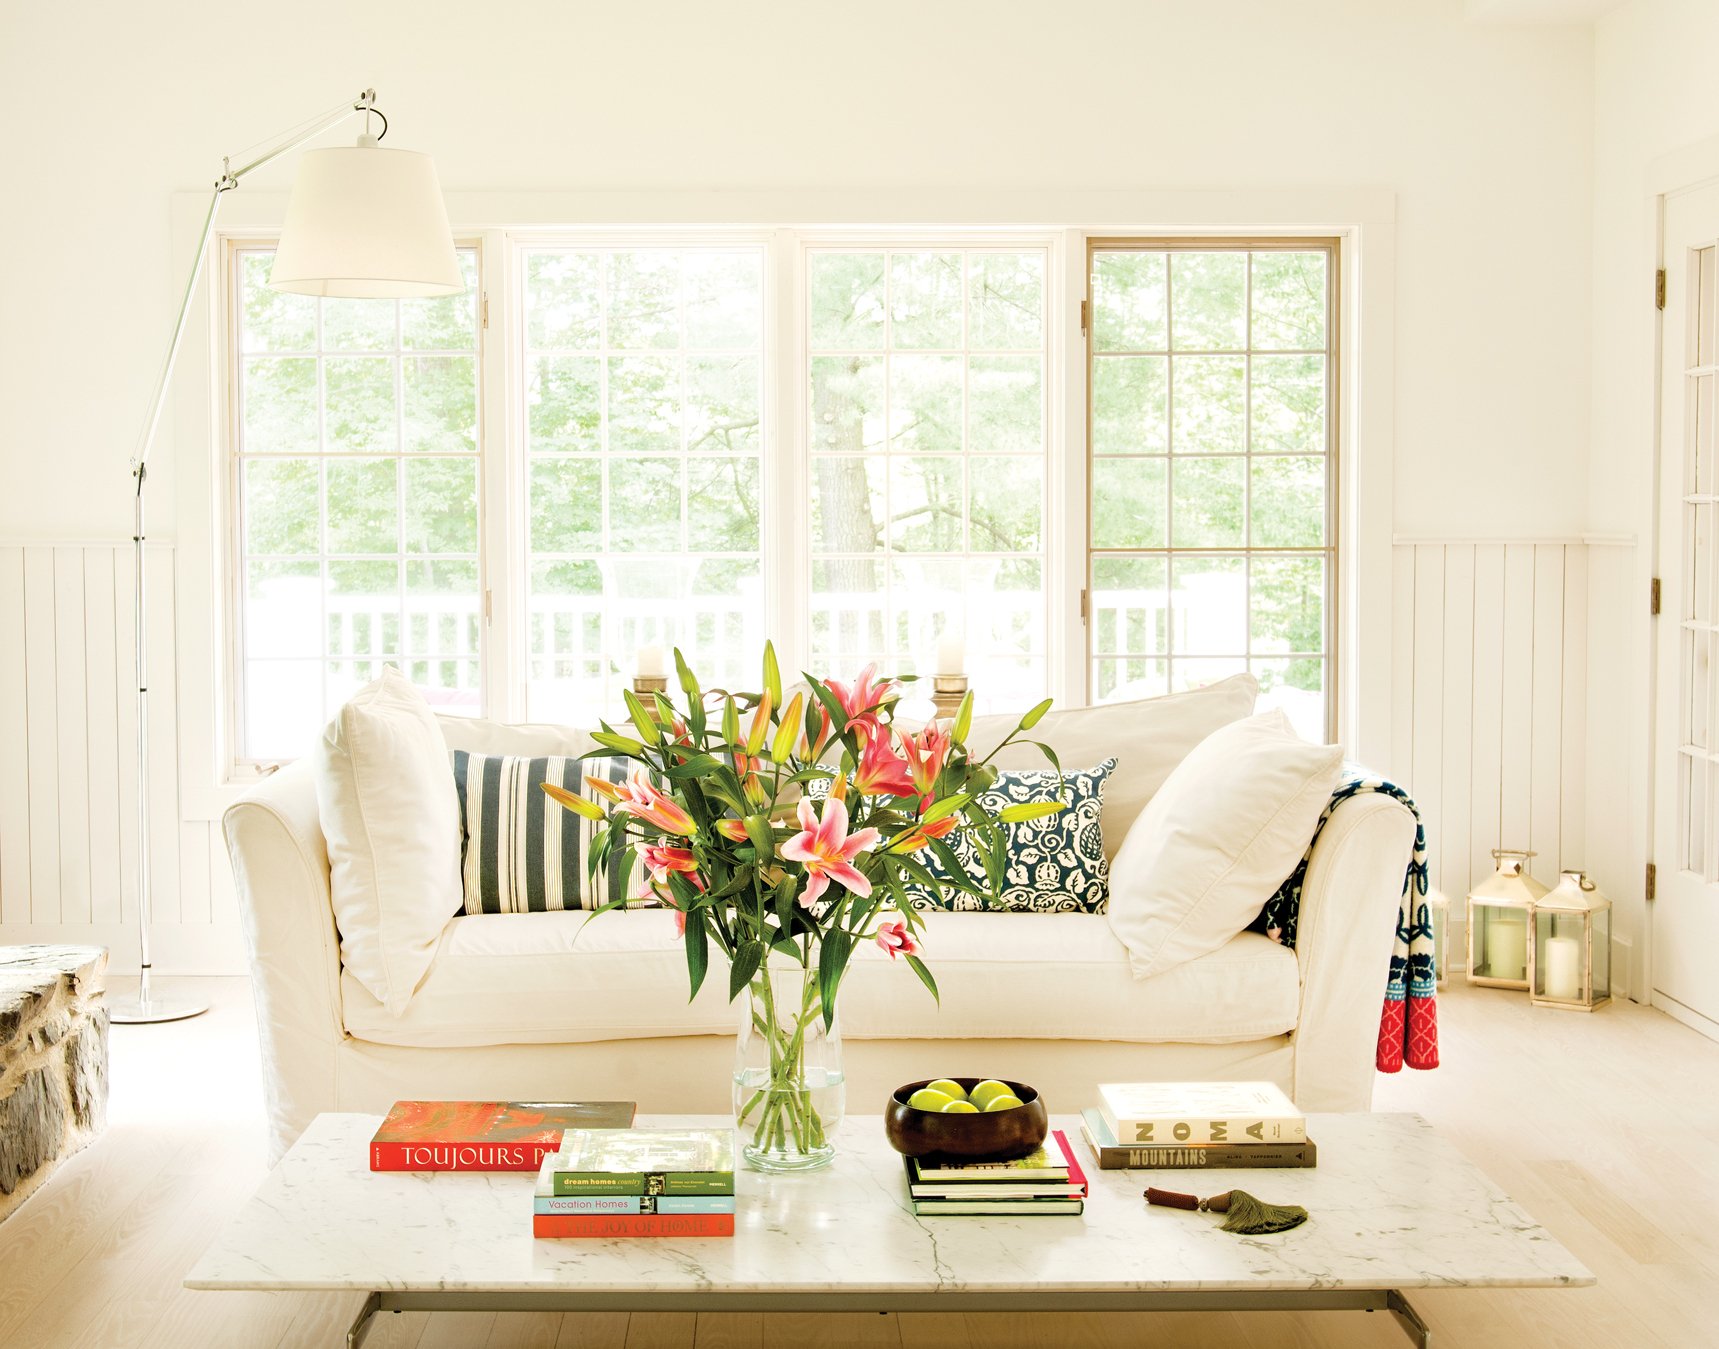 Modern, cozy home décor ideas Seven tips Chatelaine